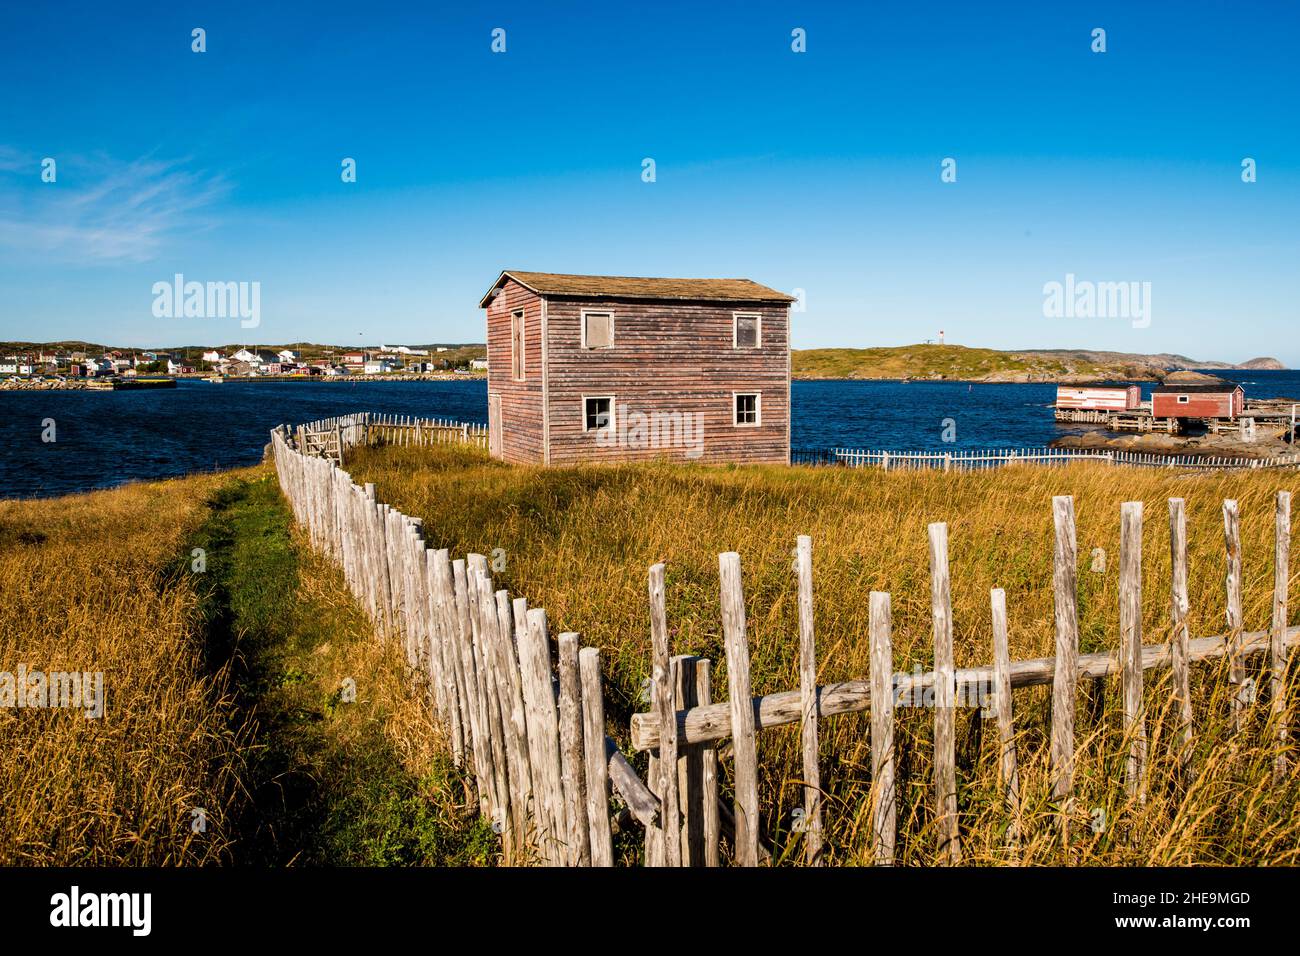 Boathouse in Joe Batt's Arm, Fogo Island, Newfoundland, Canada. Stock Photo